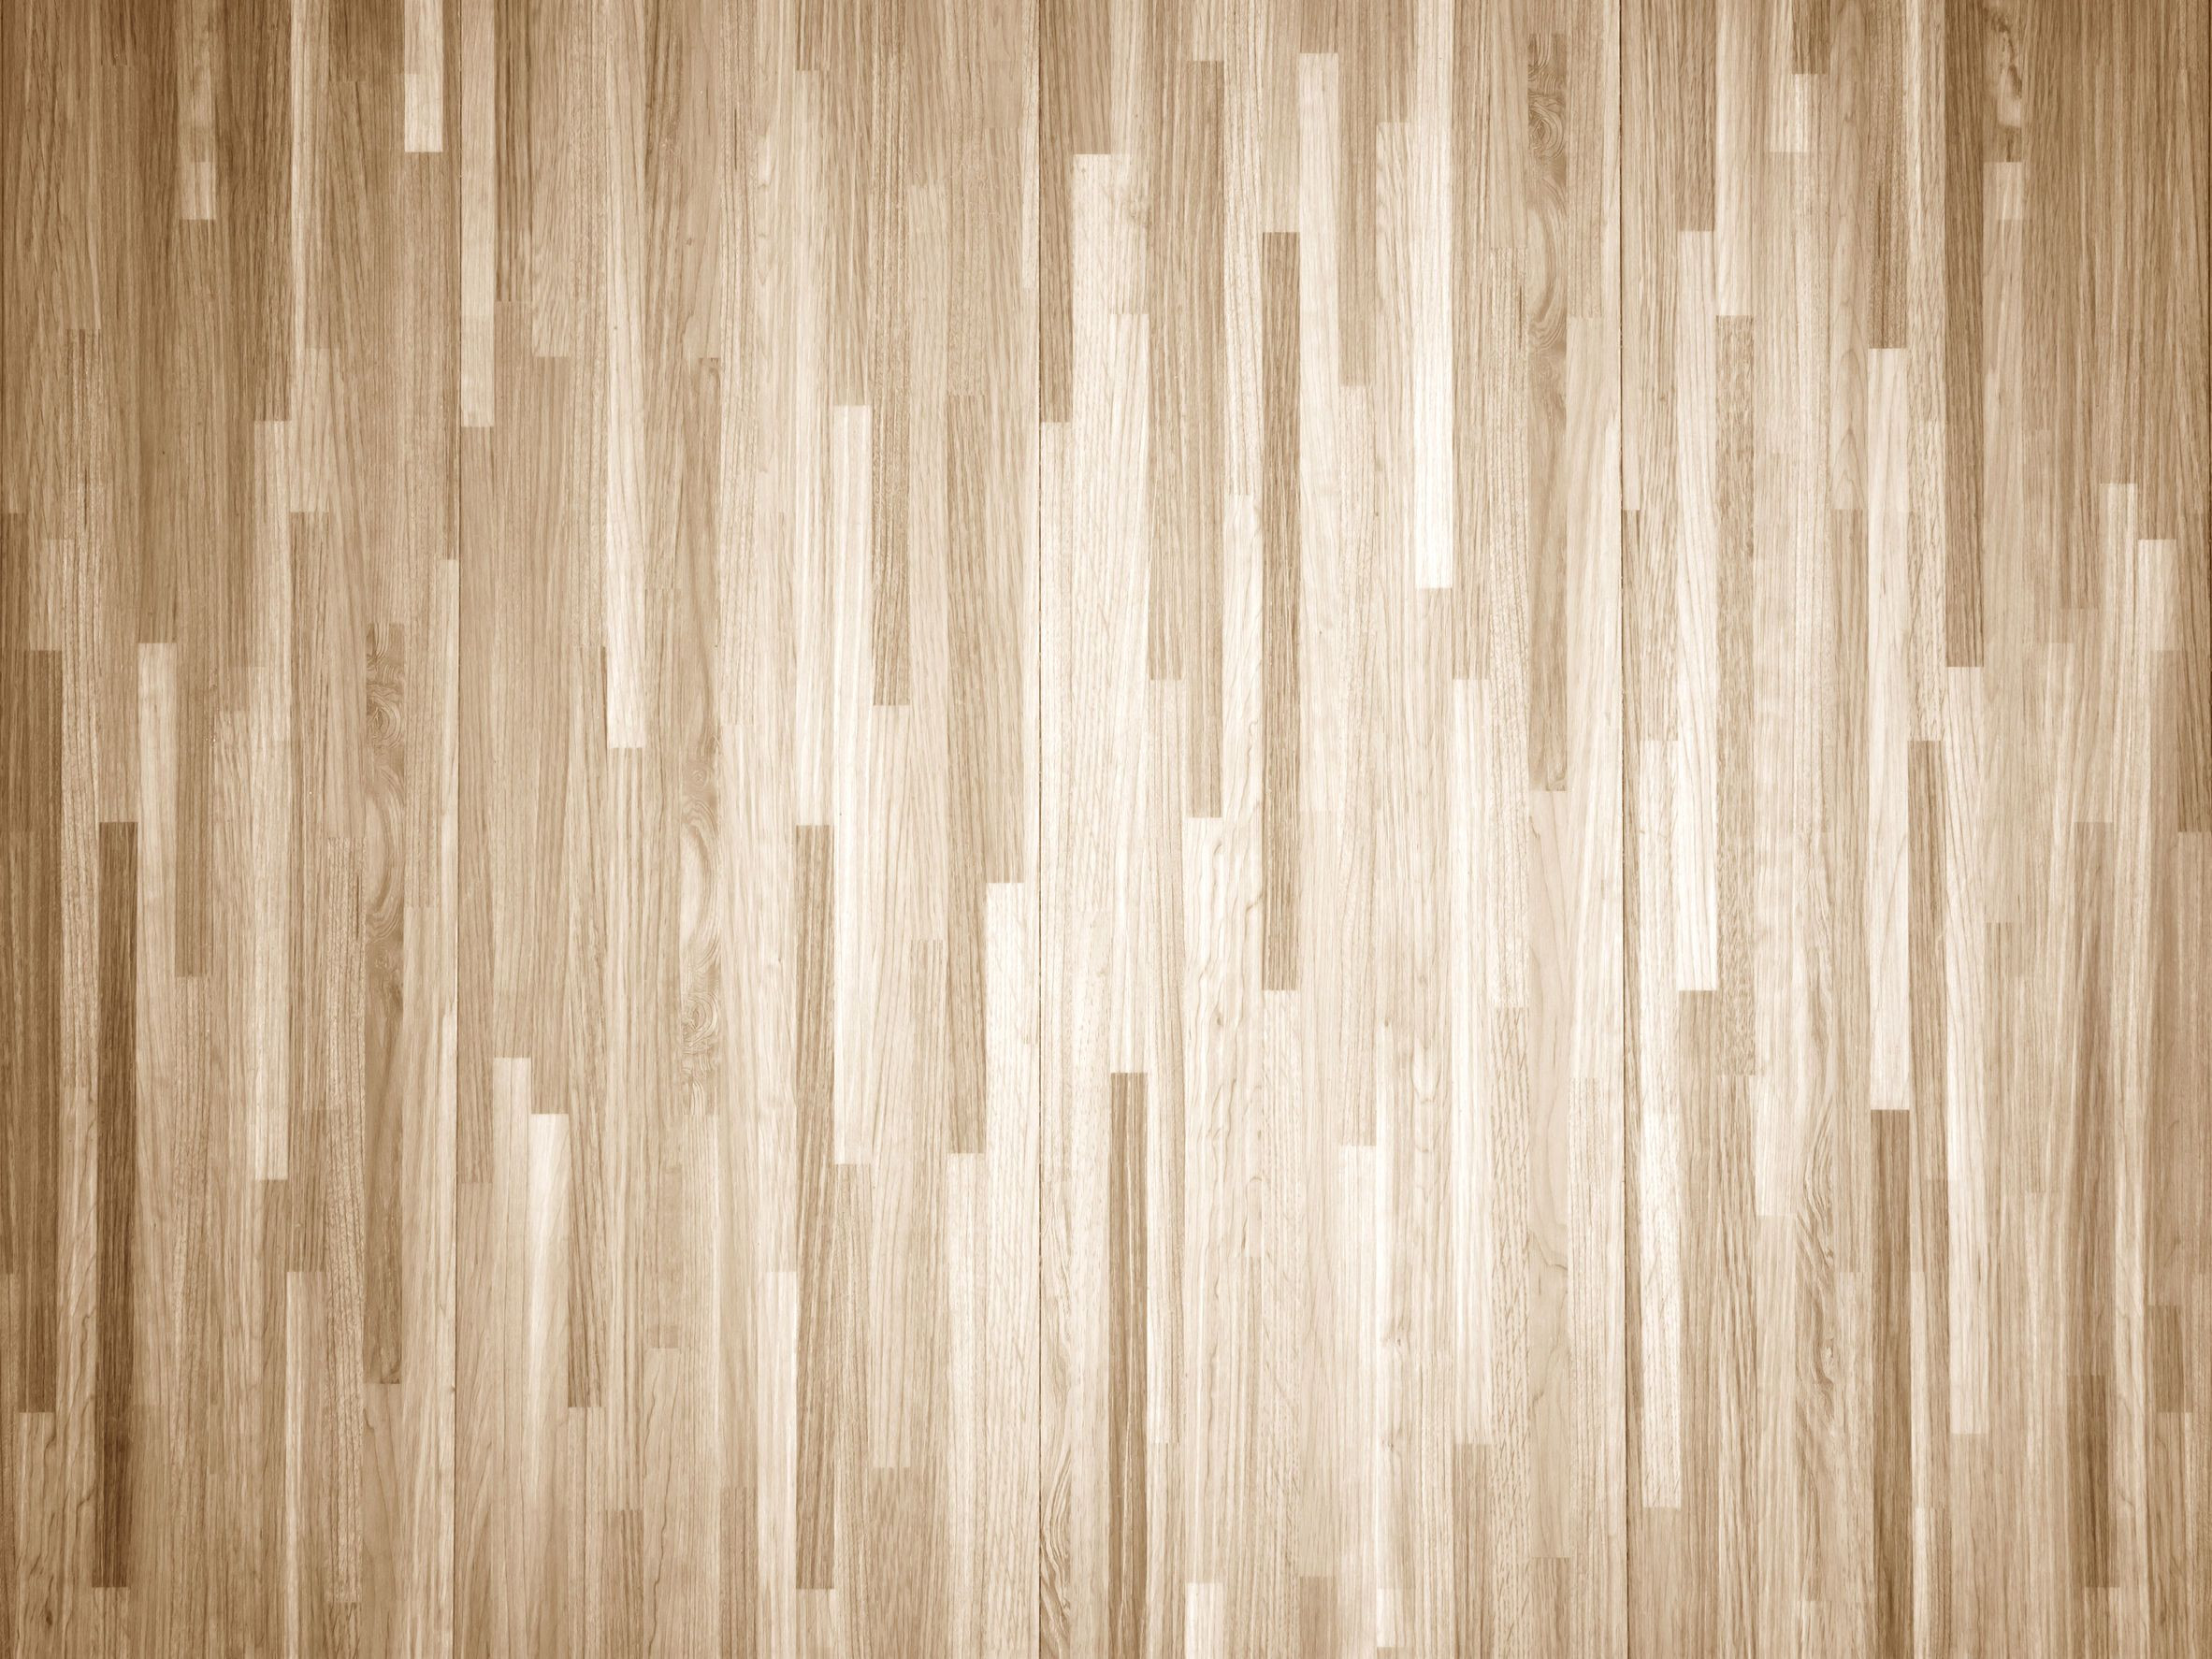 wide plank vs narrow plank hardwood flooring of how to chemically strip wood floors woodfloordoctor com regarding you